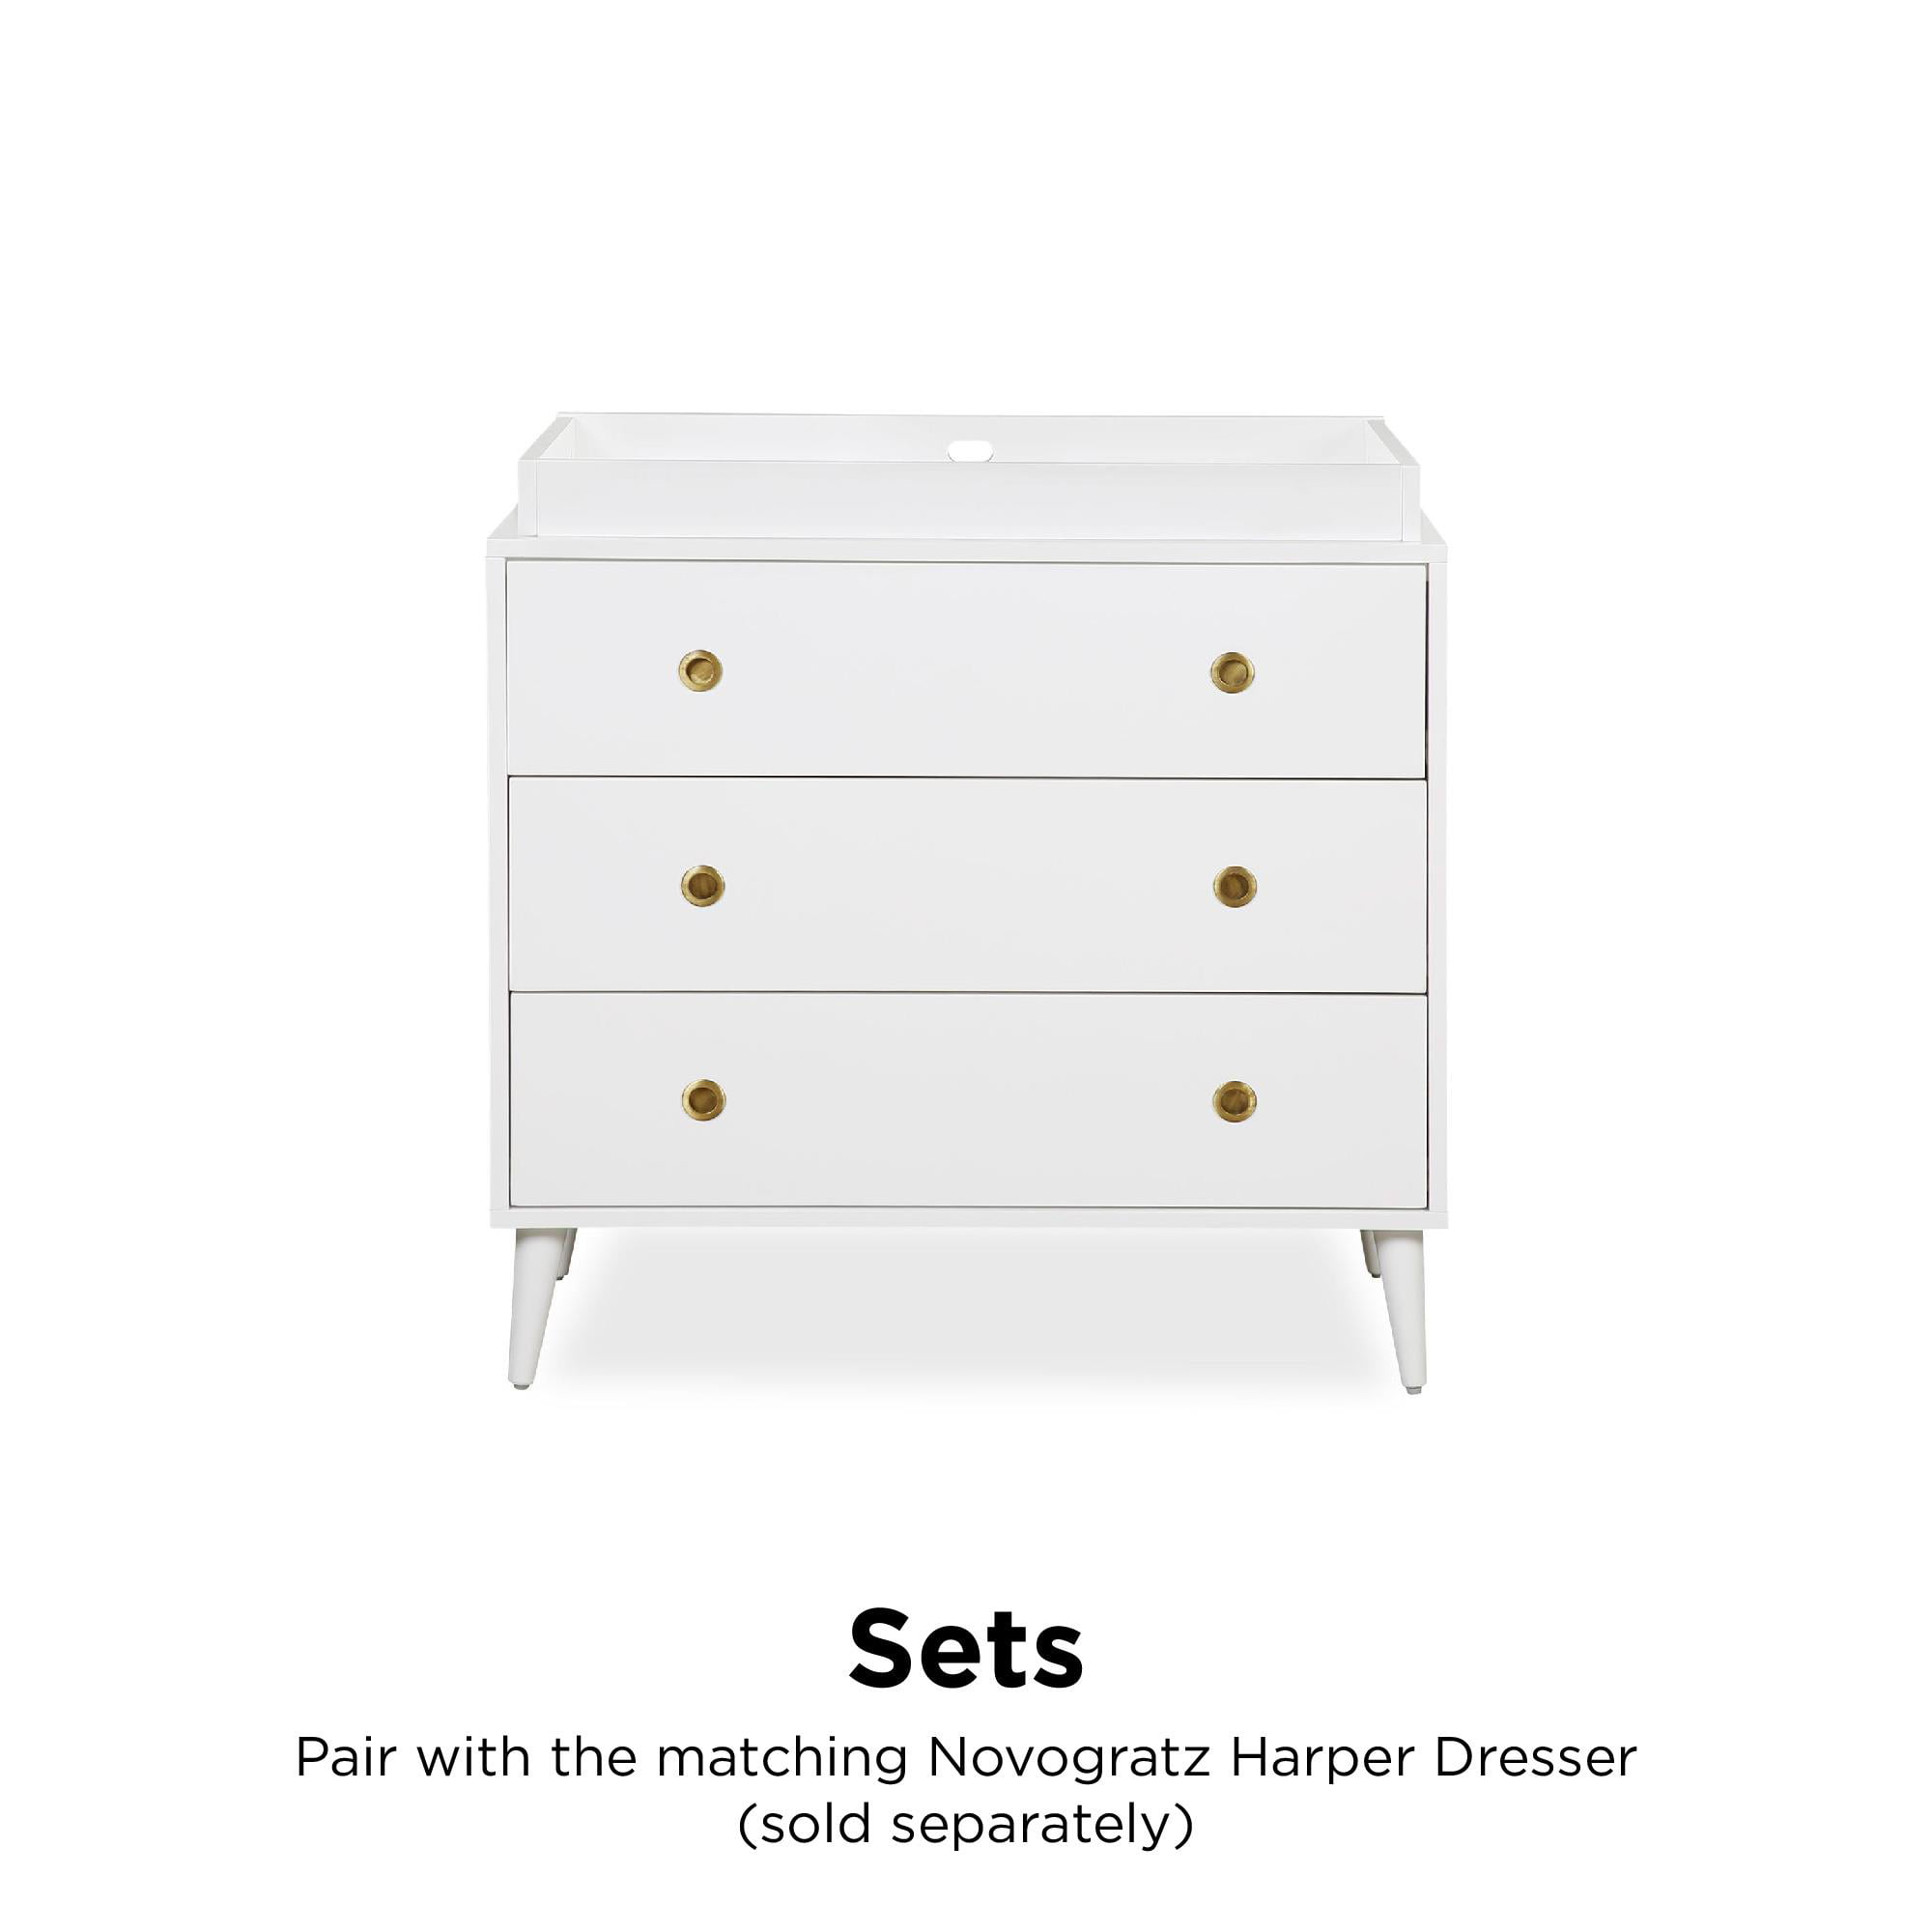 White Novogratz Harper Baby Changing Table Dresser Topper 